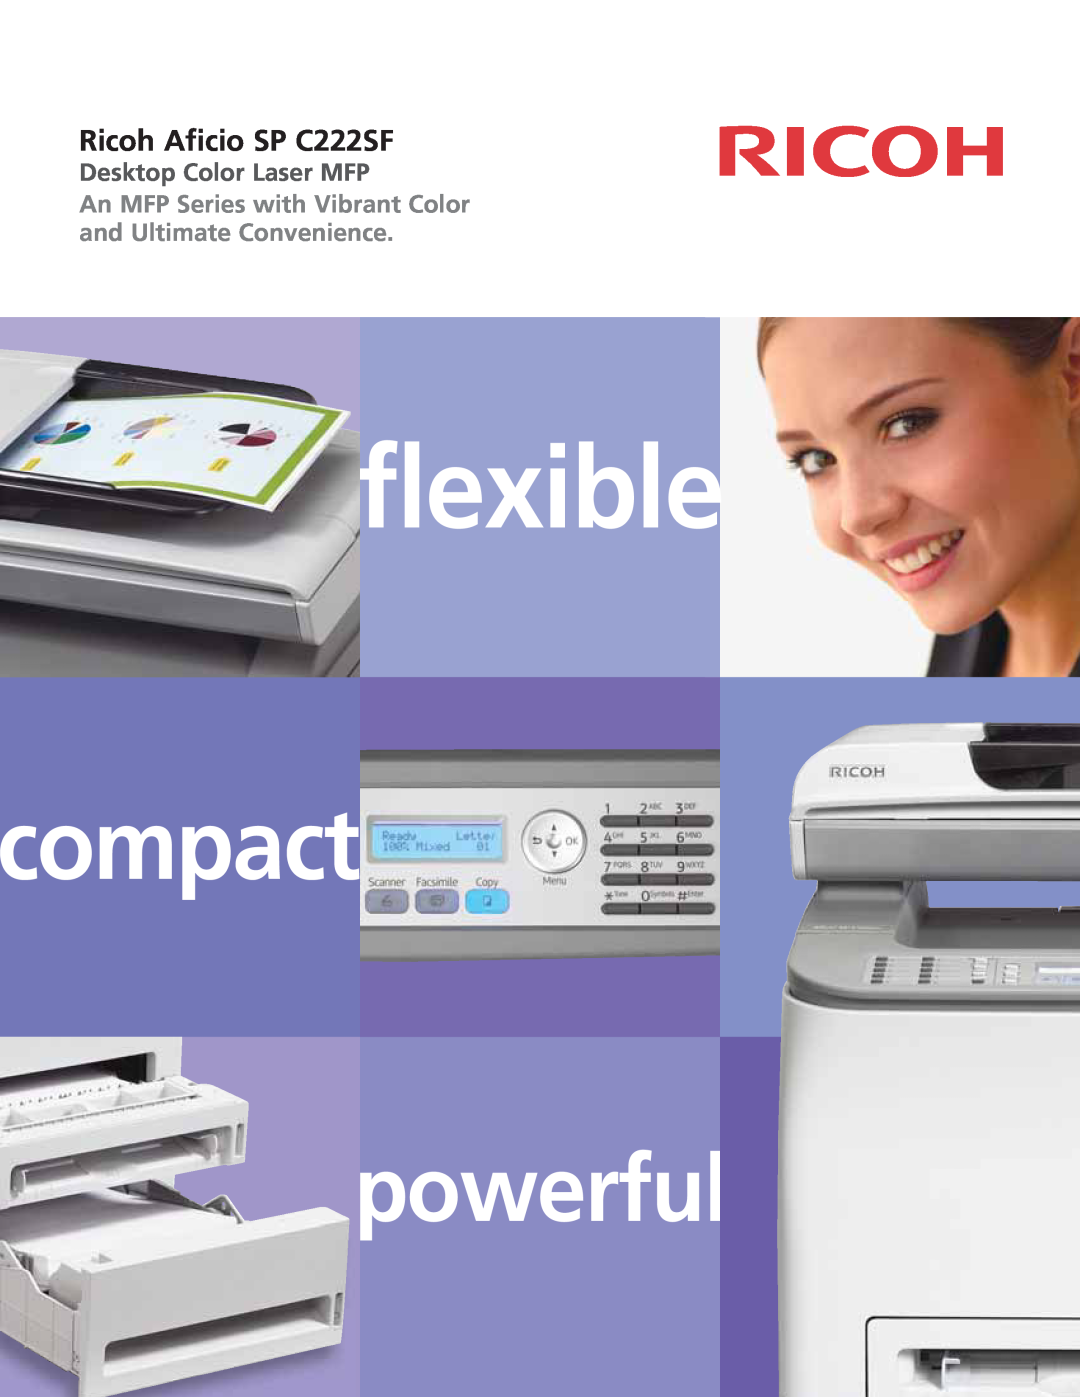 Ricoh manual flexible, compact, powerful, Ricoh Aficio SP C222SF, Desktop Color Laser MFP 